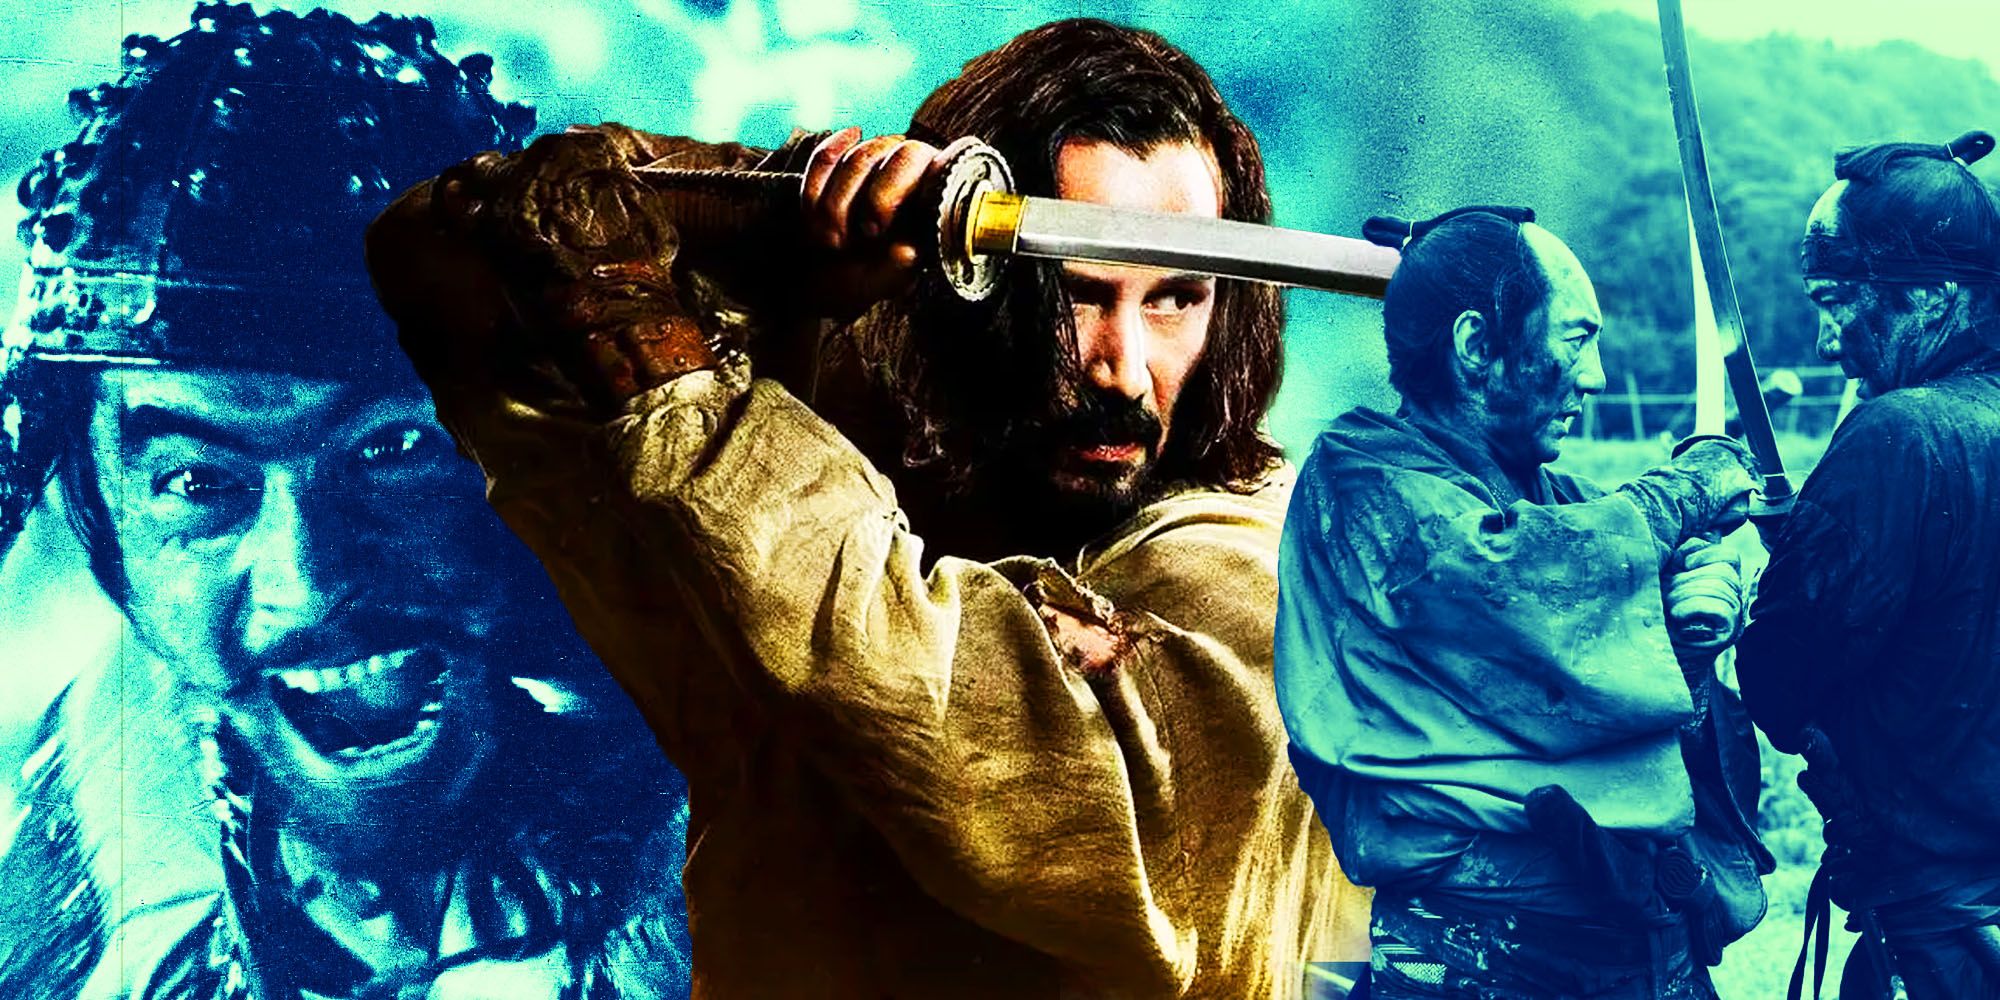 Keanu Reeves in 47 Ronin next to similar samurai movie scenes